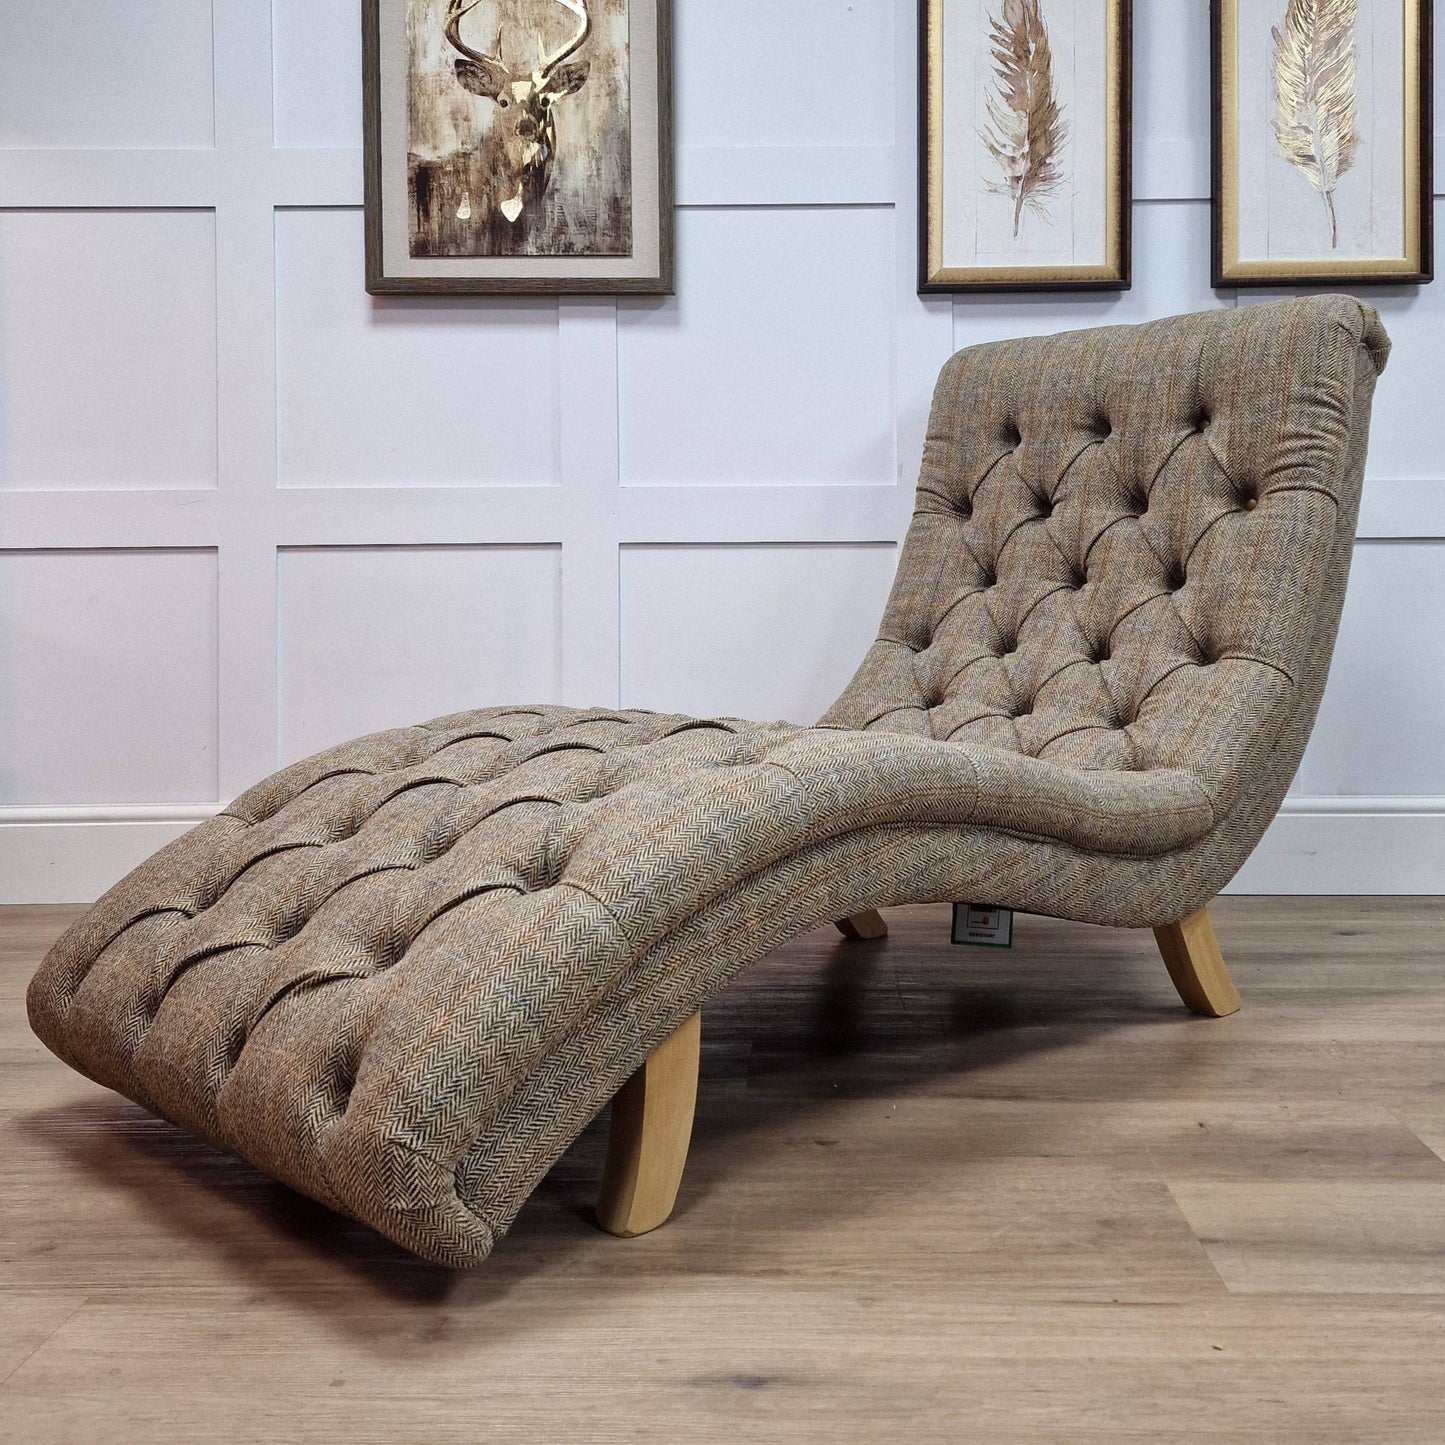 Harris Tweed Chaise Longue - Brown and Beige Herringbone | Classic - Rydan Interiors